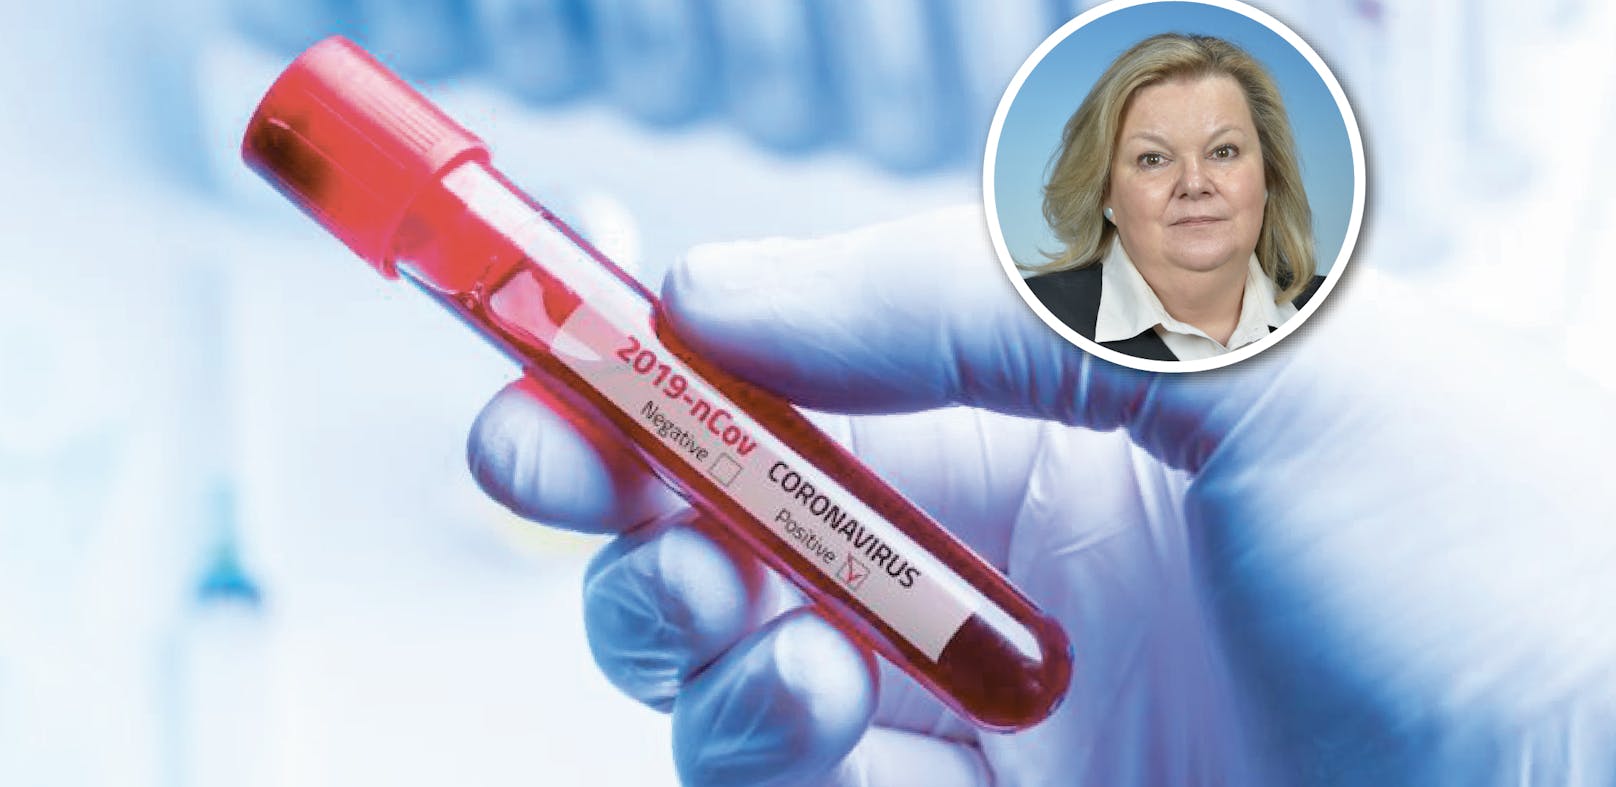 Landessanitätsdirektorin Dr. Irmgard Lechner nimmt zum Coronavirus Stellung.